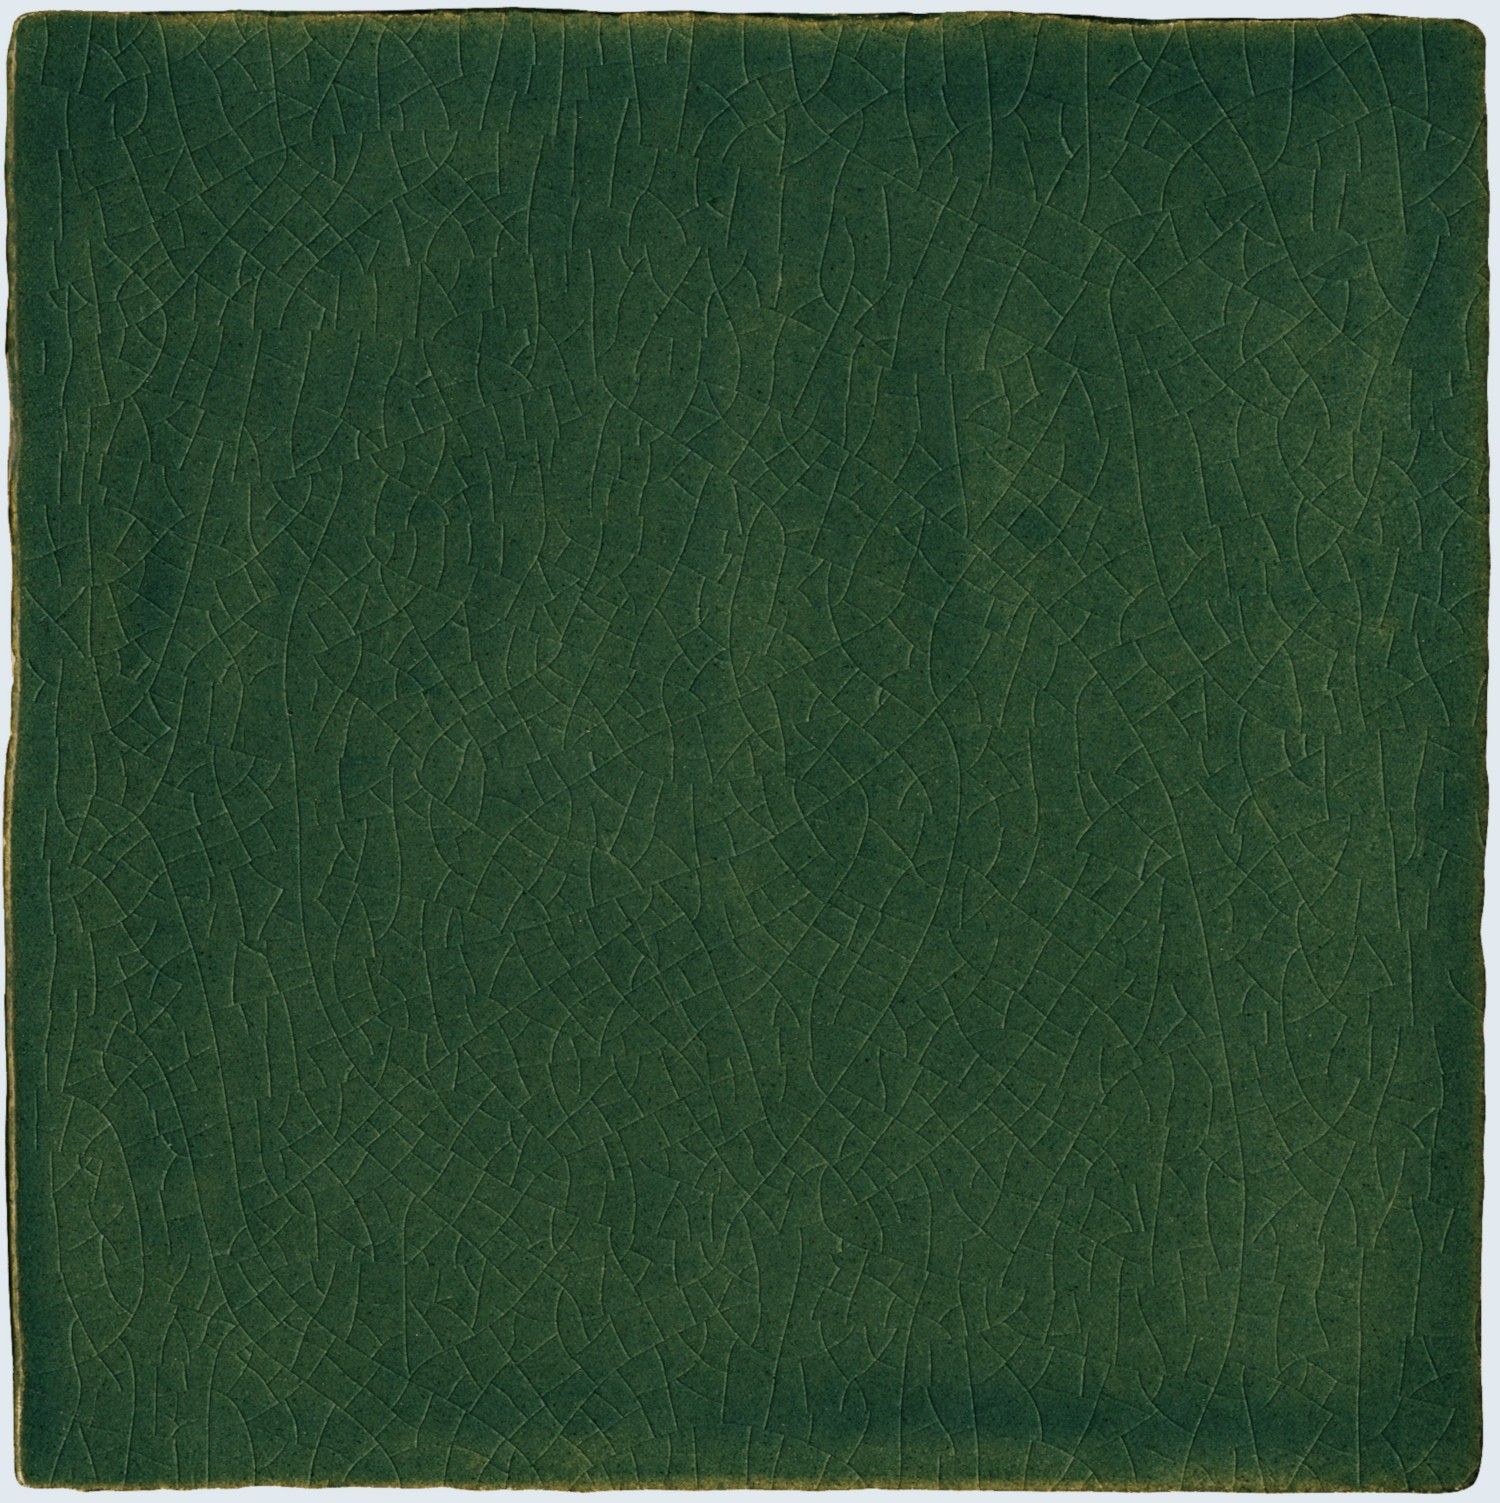 Craquele Victorian Green 15x15